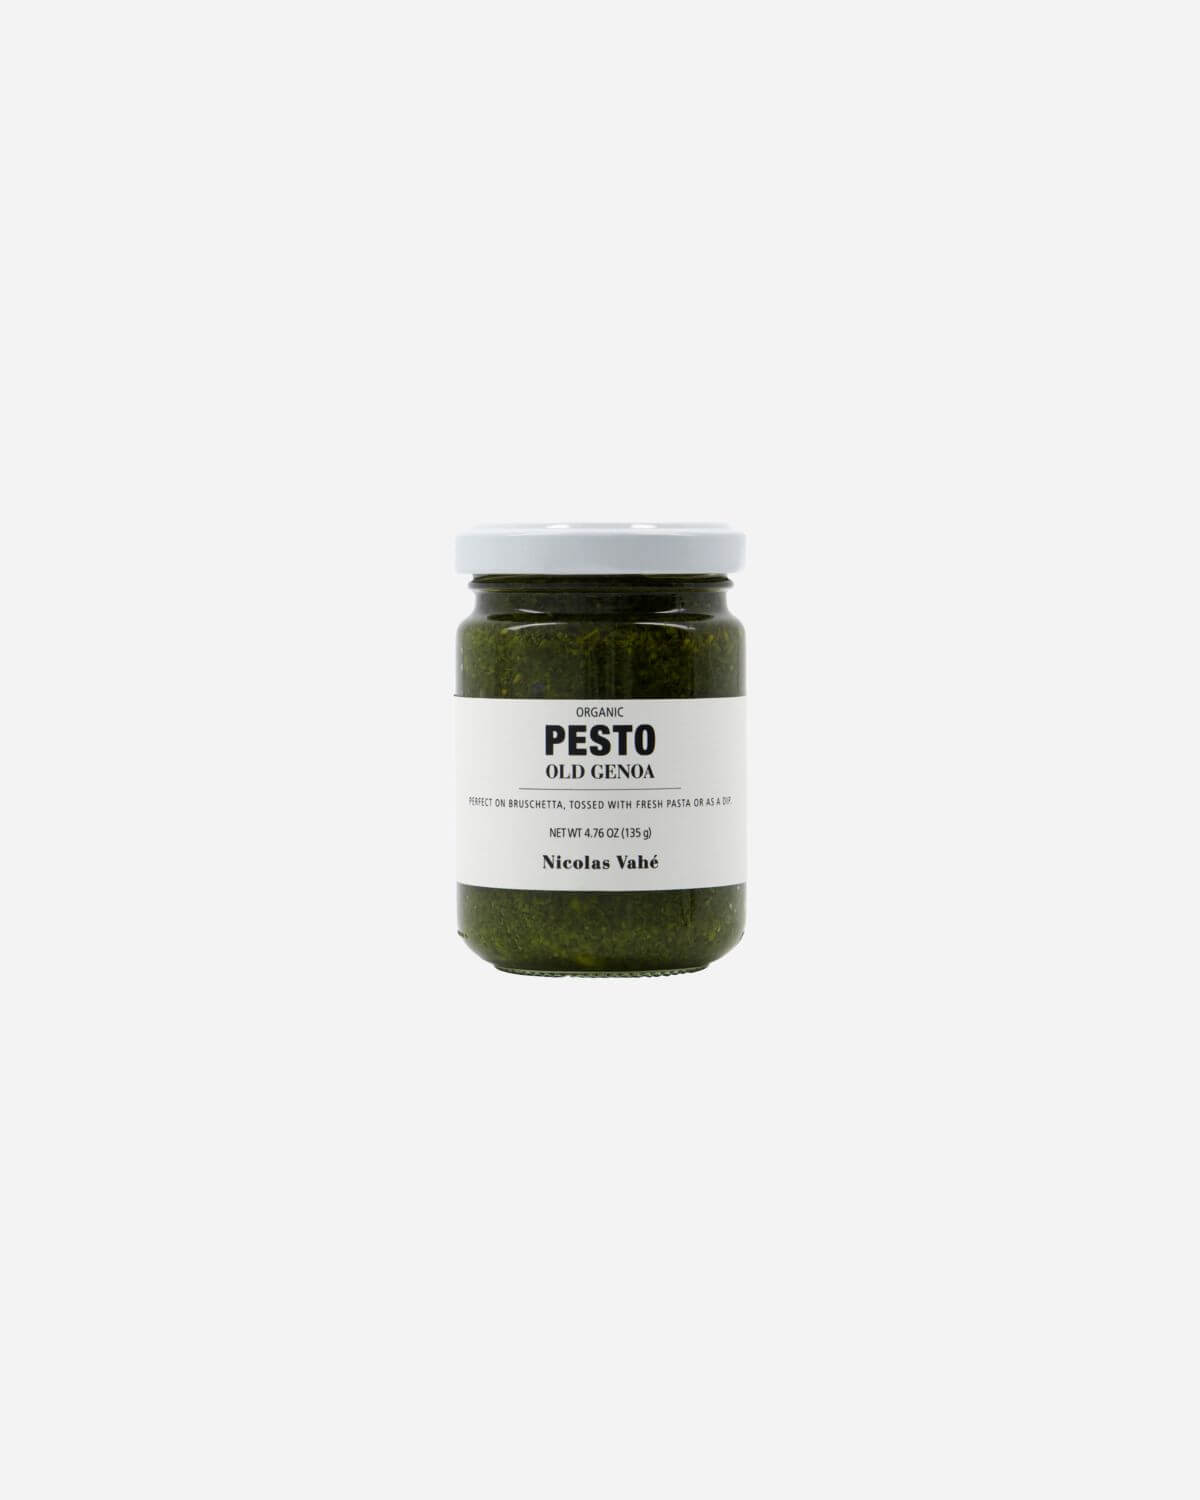 Pestó - Old Genoa